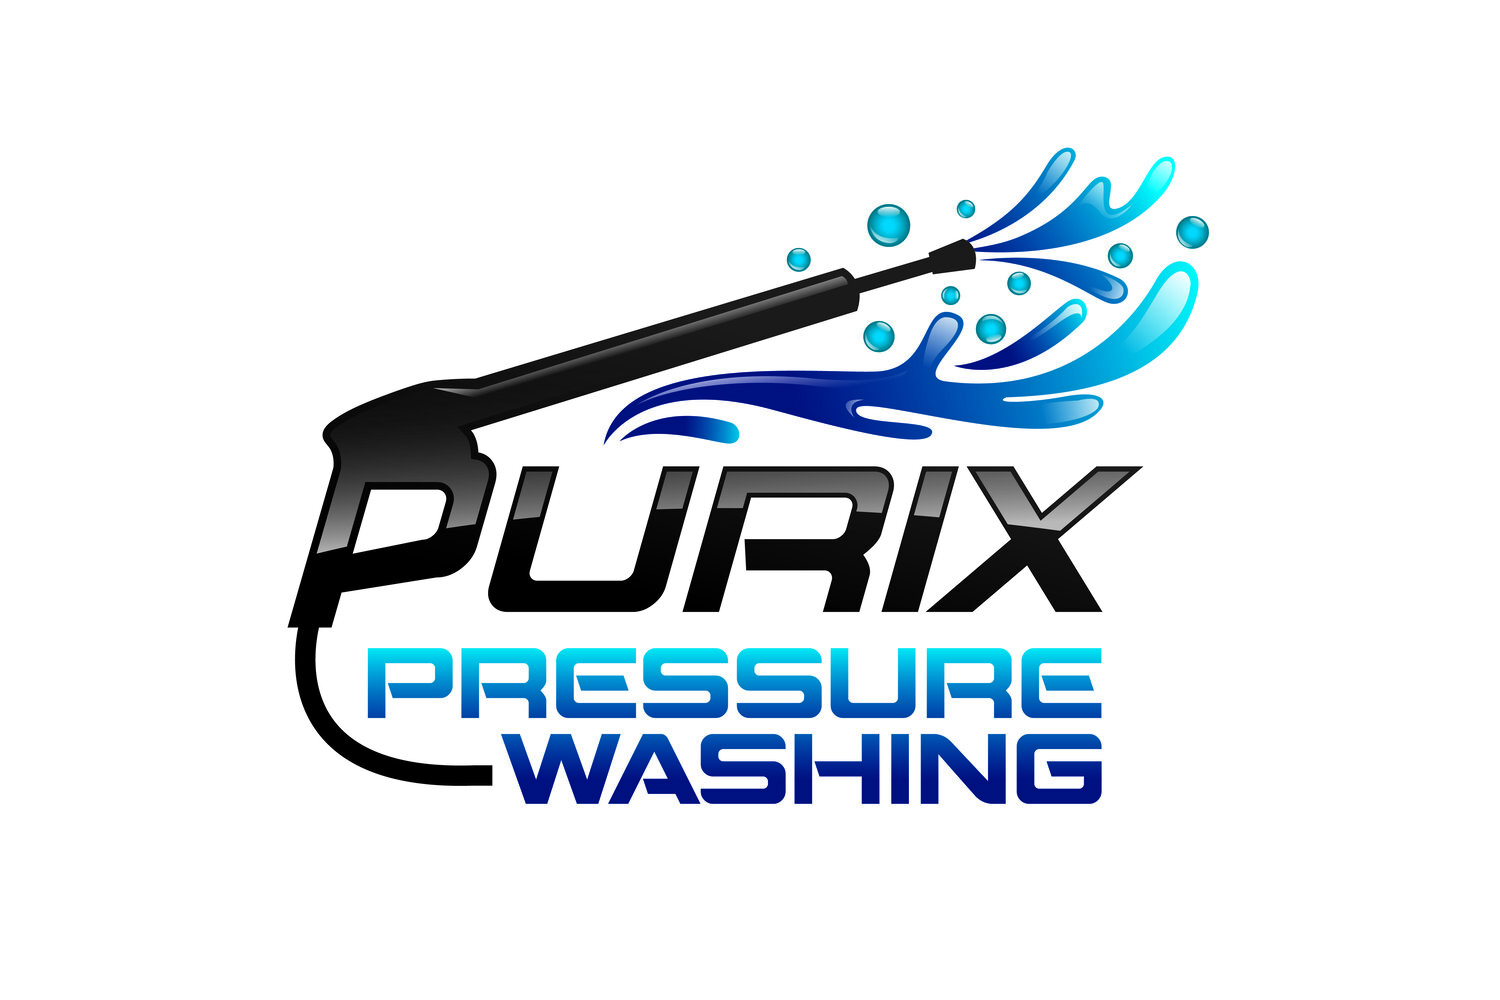 Purix Pressure Washing LLC